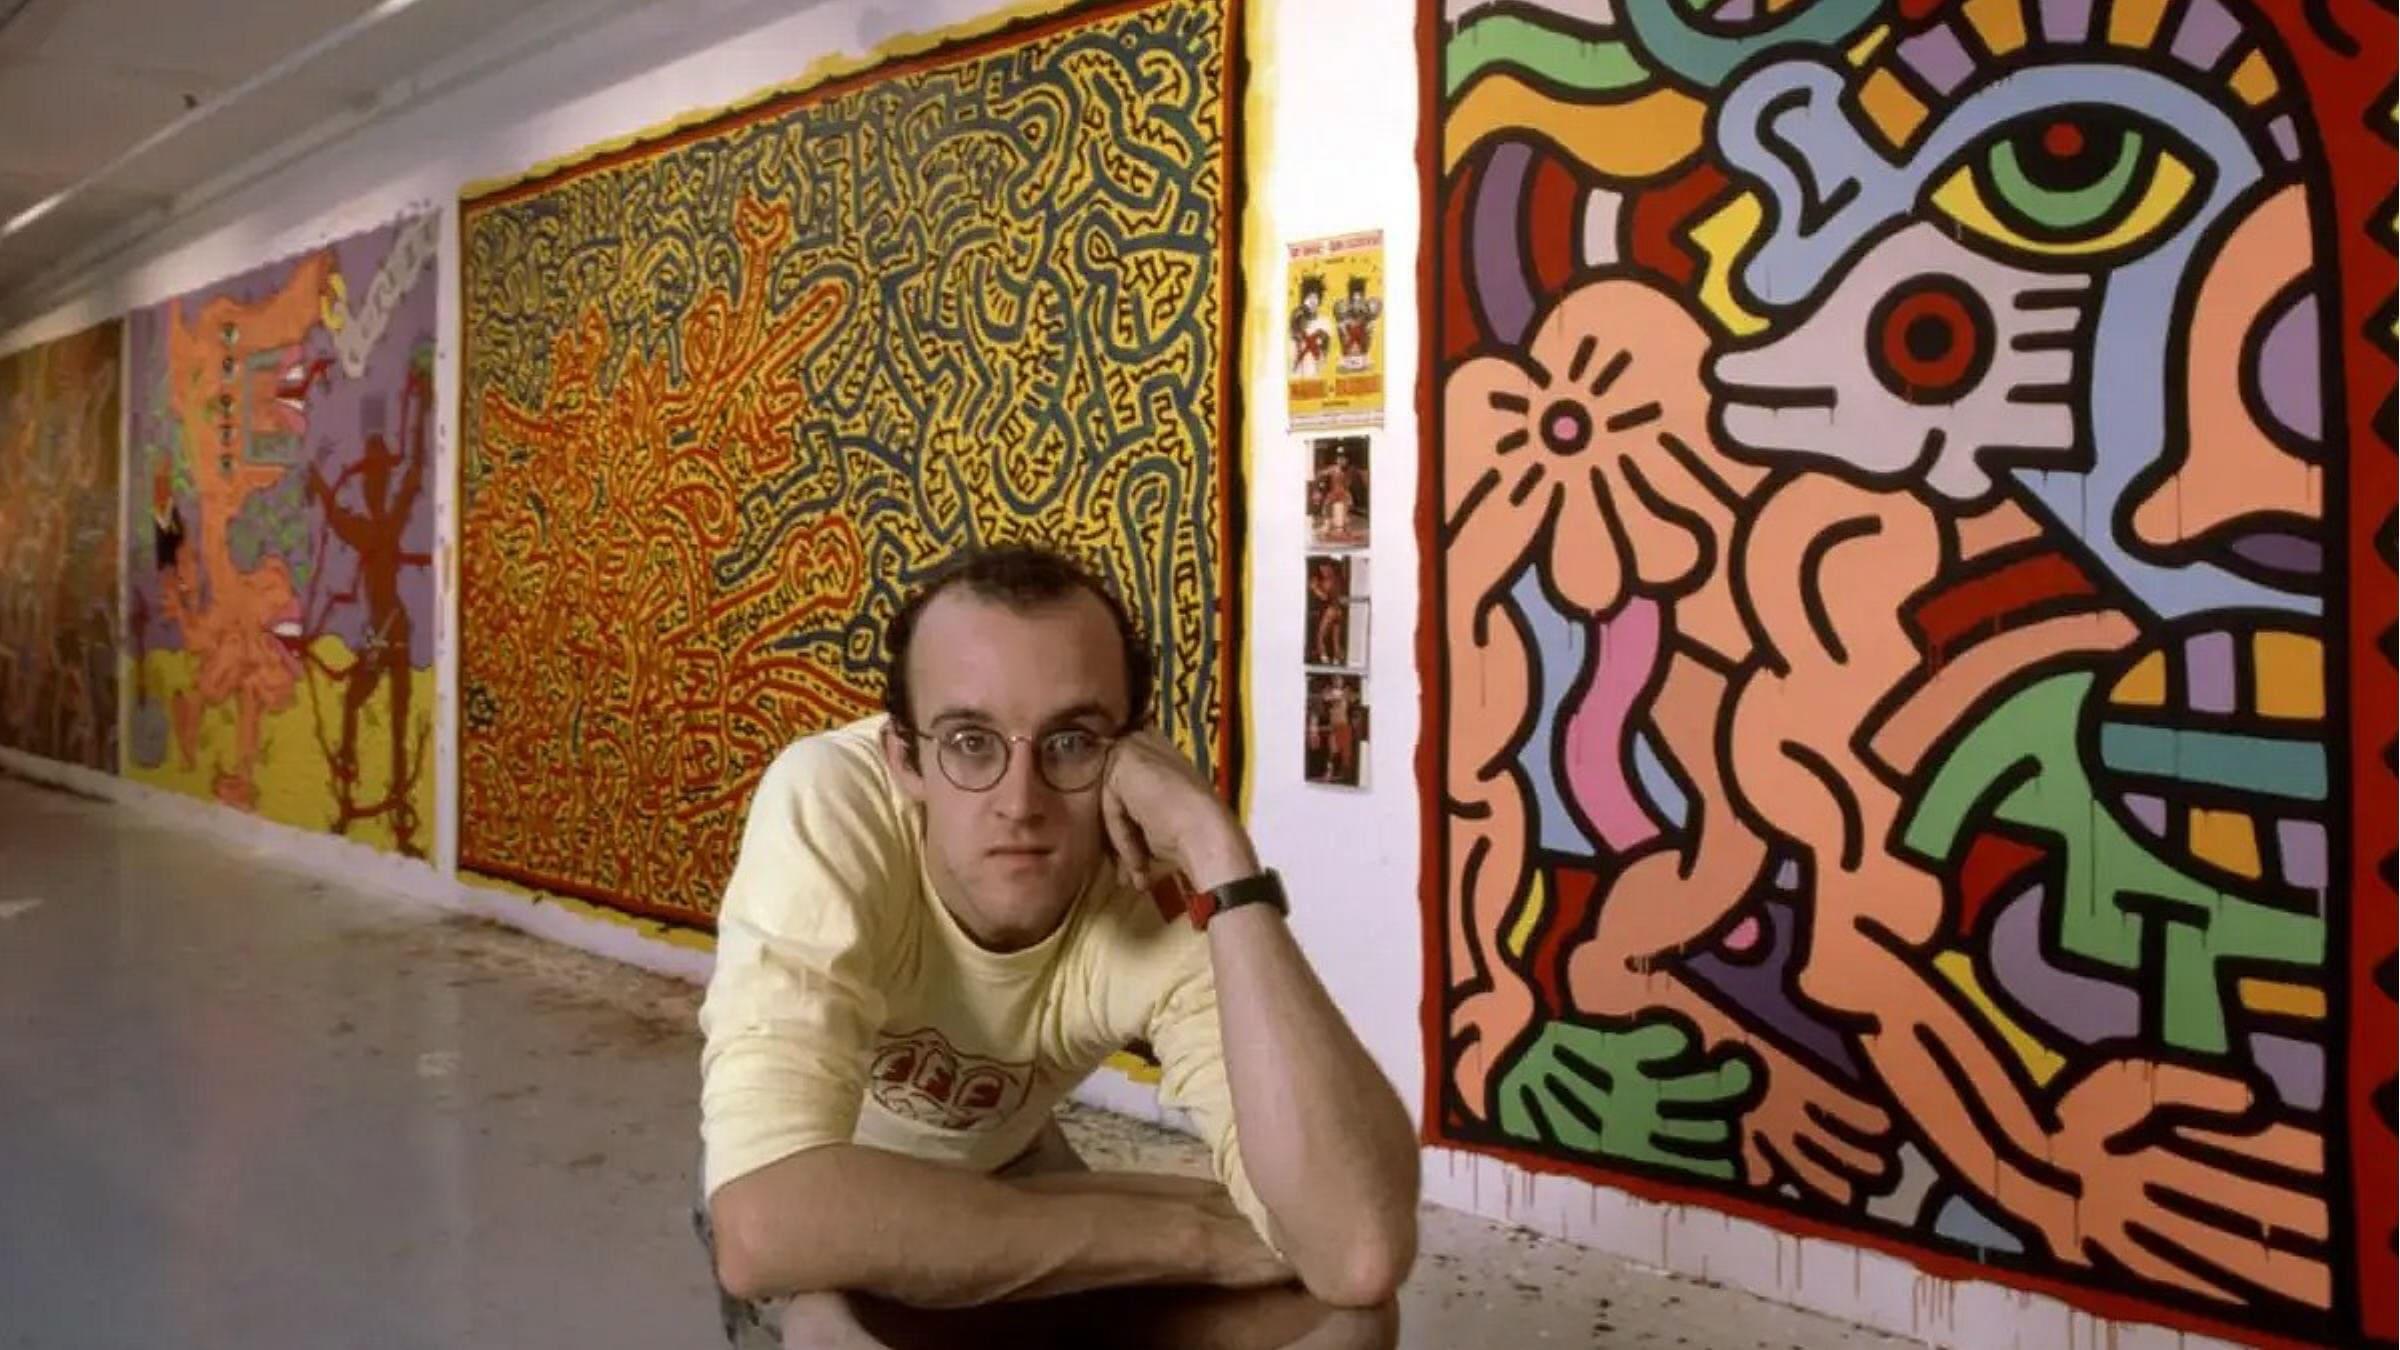 Keith Haring: Street Art Boy backdrop